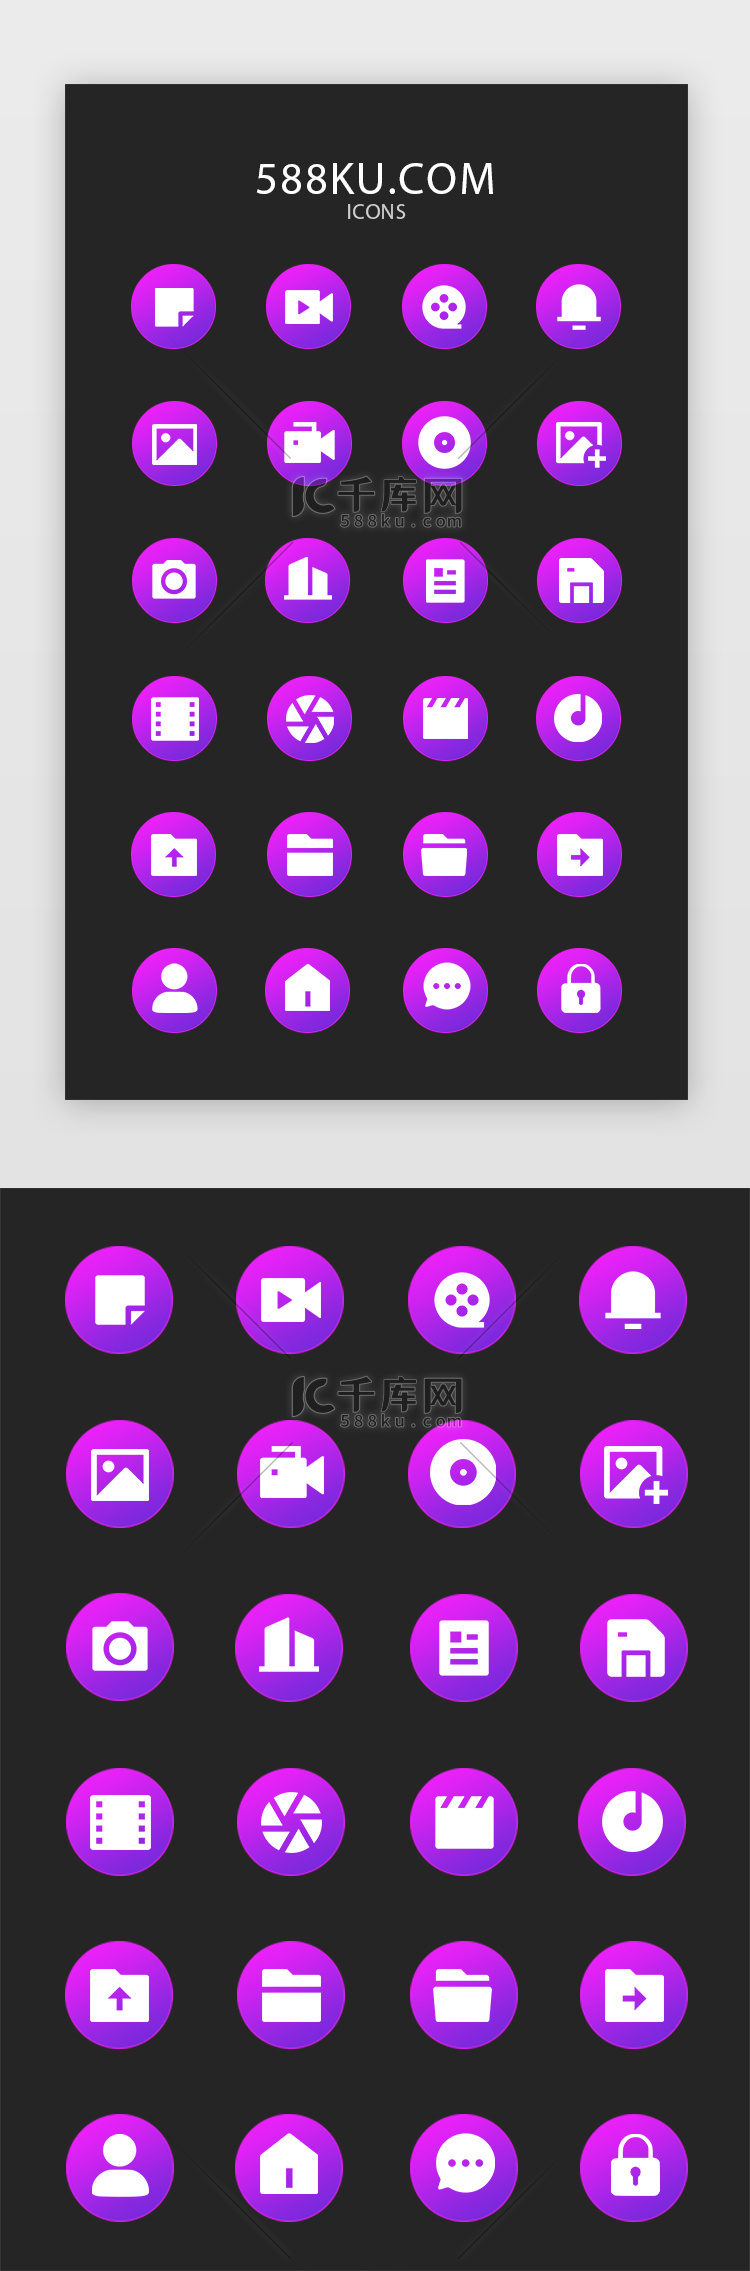 紫色渐变直播app常用icon图标